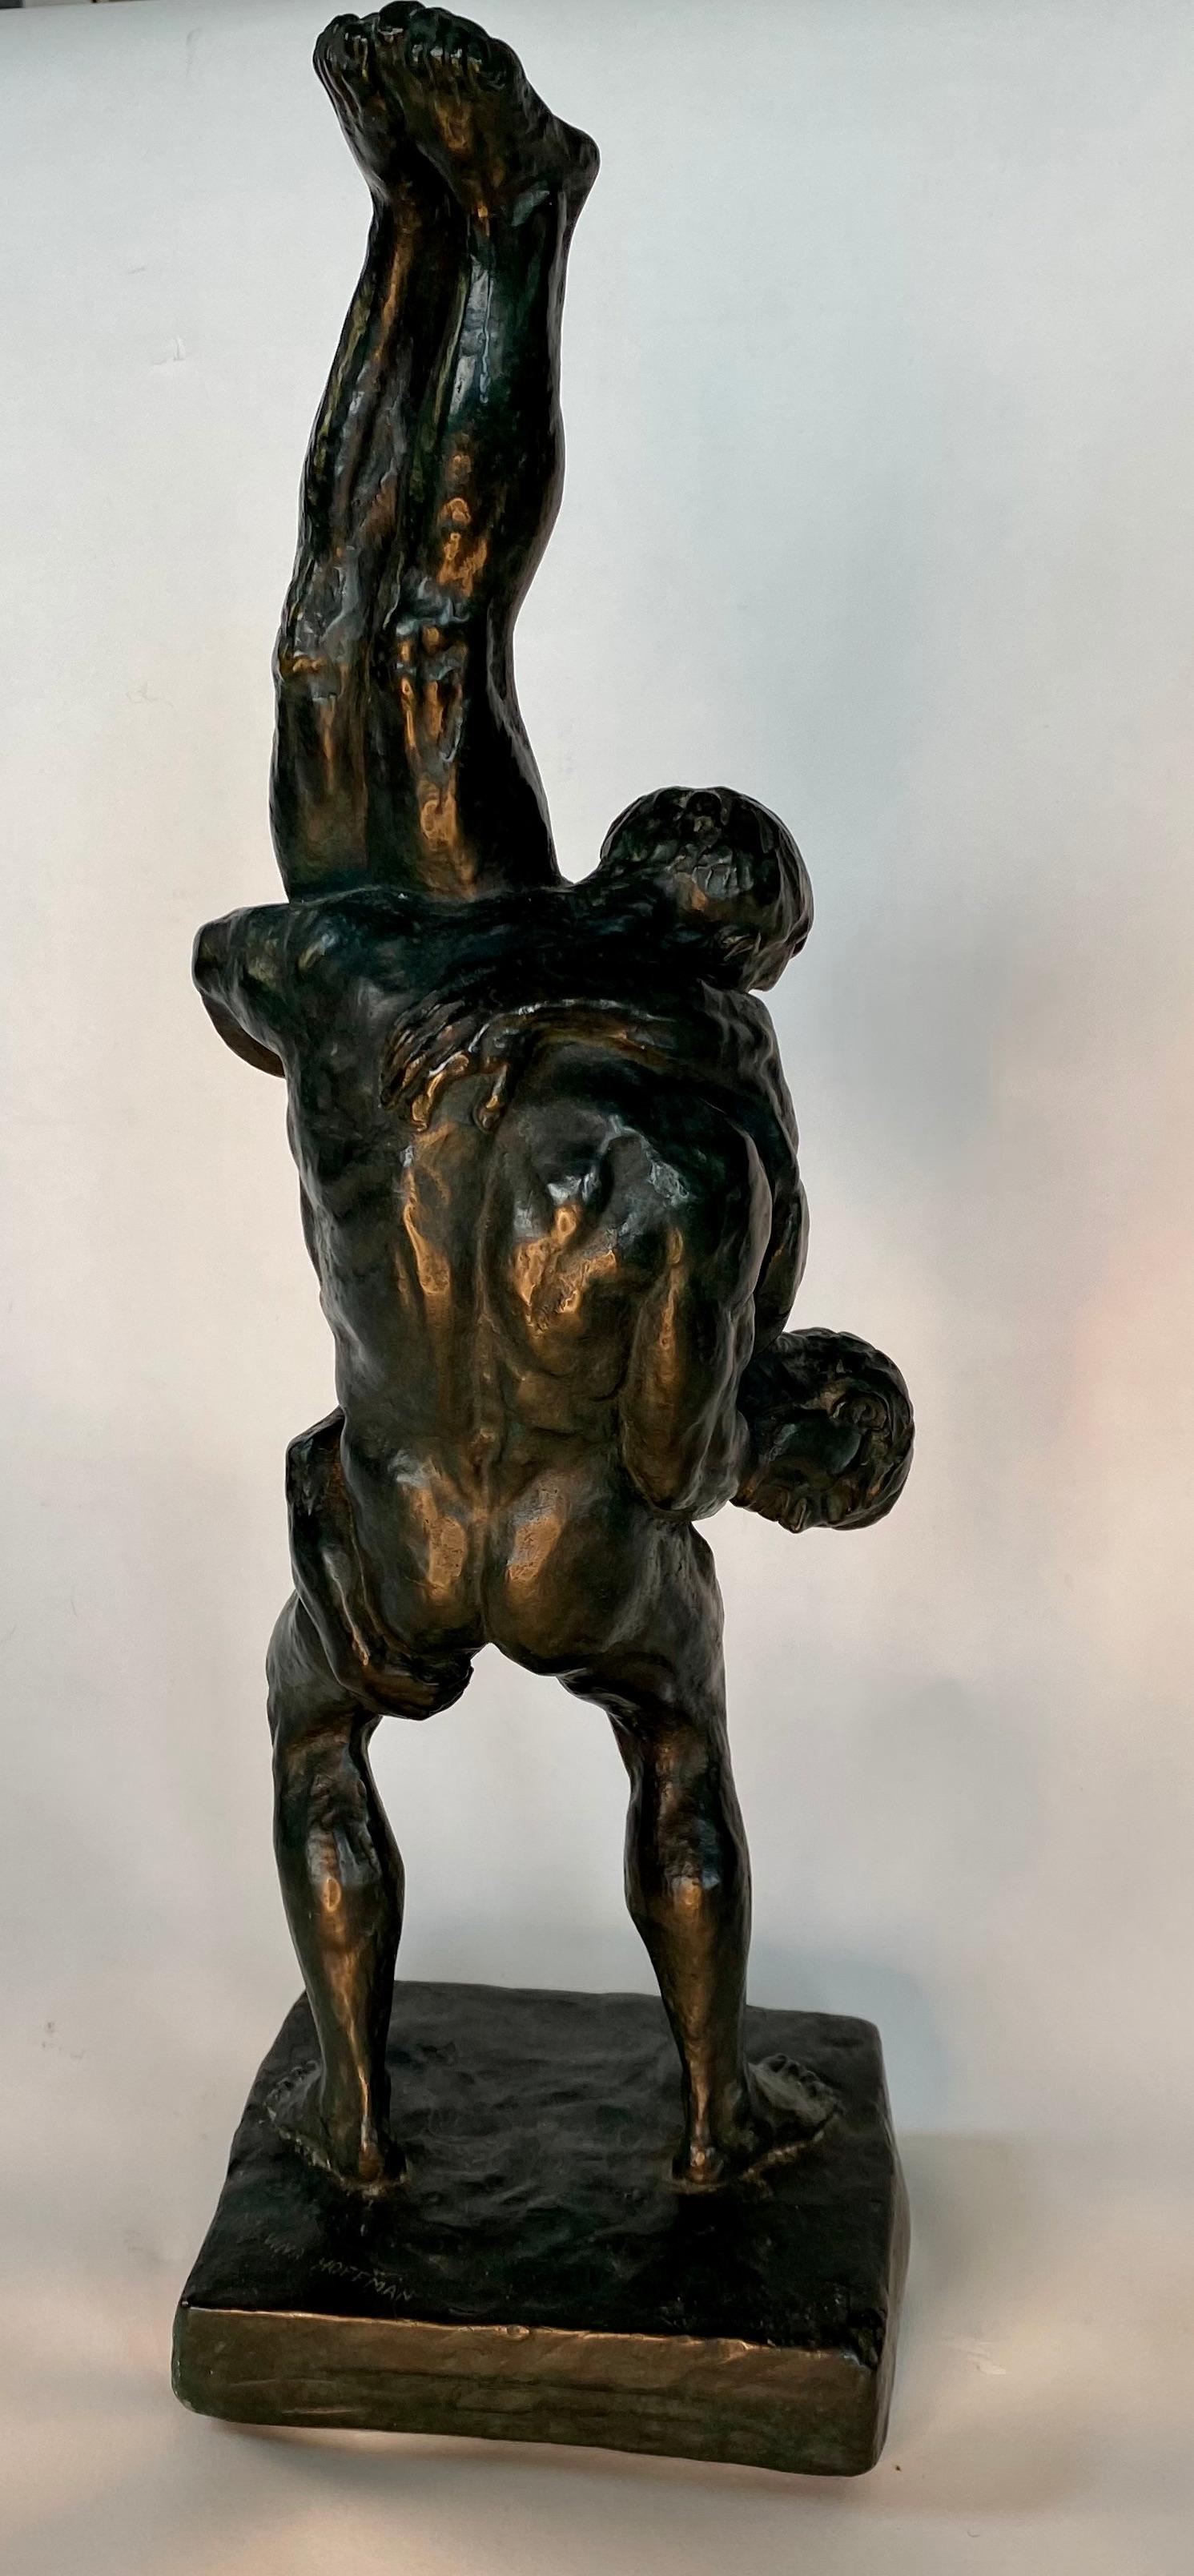 Breton Wrestlers Bronze Figurative Modern Male Sculpture Female Artist LGBT WPA 1